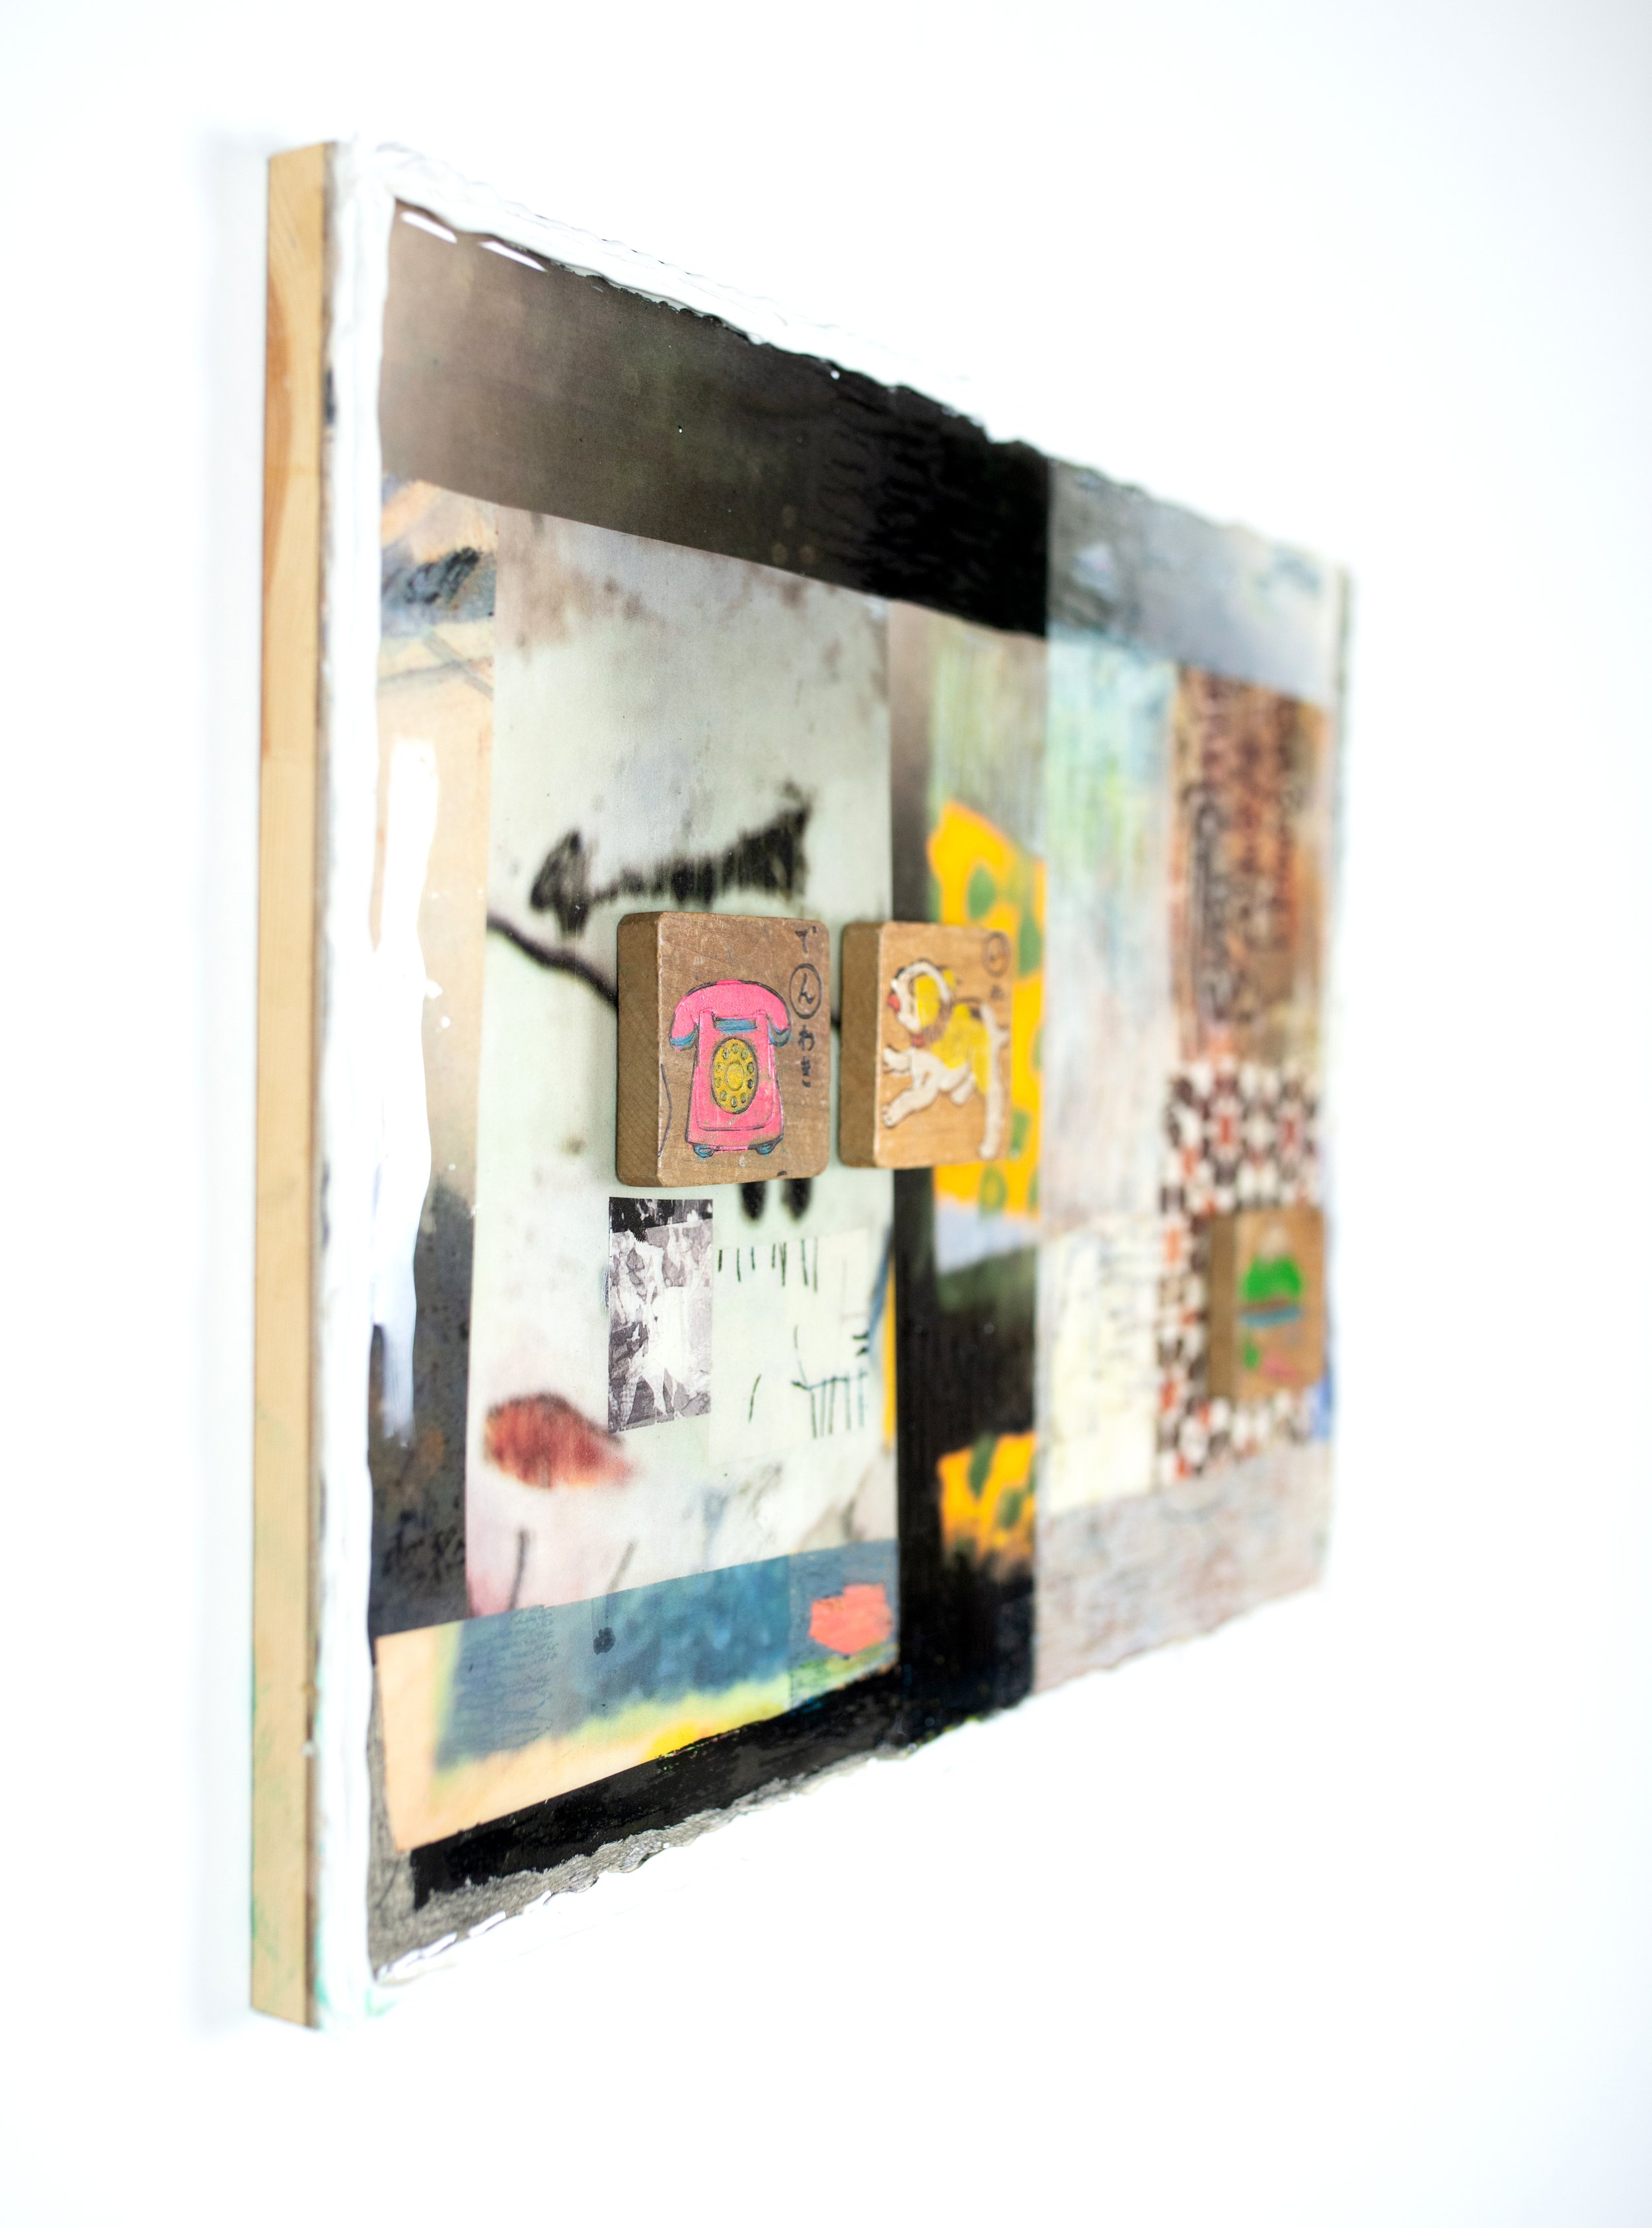    Fuji San    Acrylic, paper collage, pastel, pencil, children’s blocks, caulk on panel   14 x 18 in. 